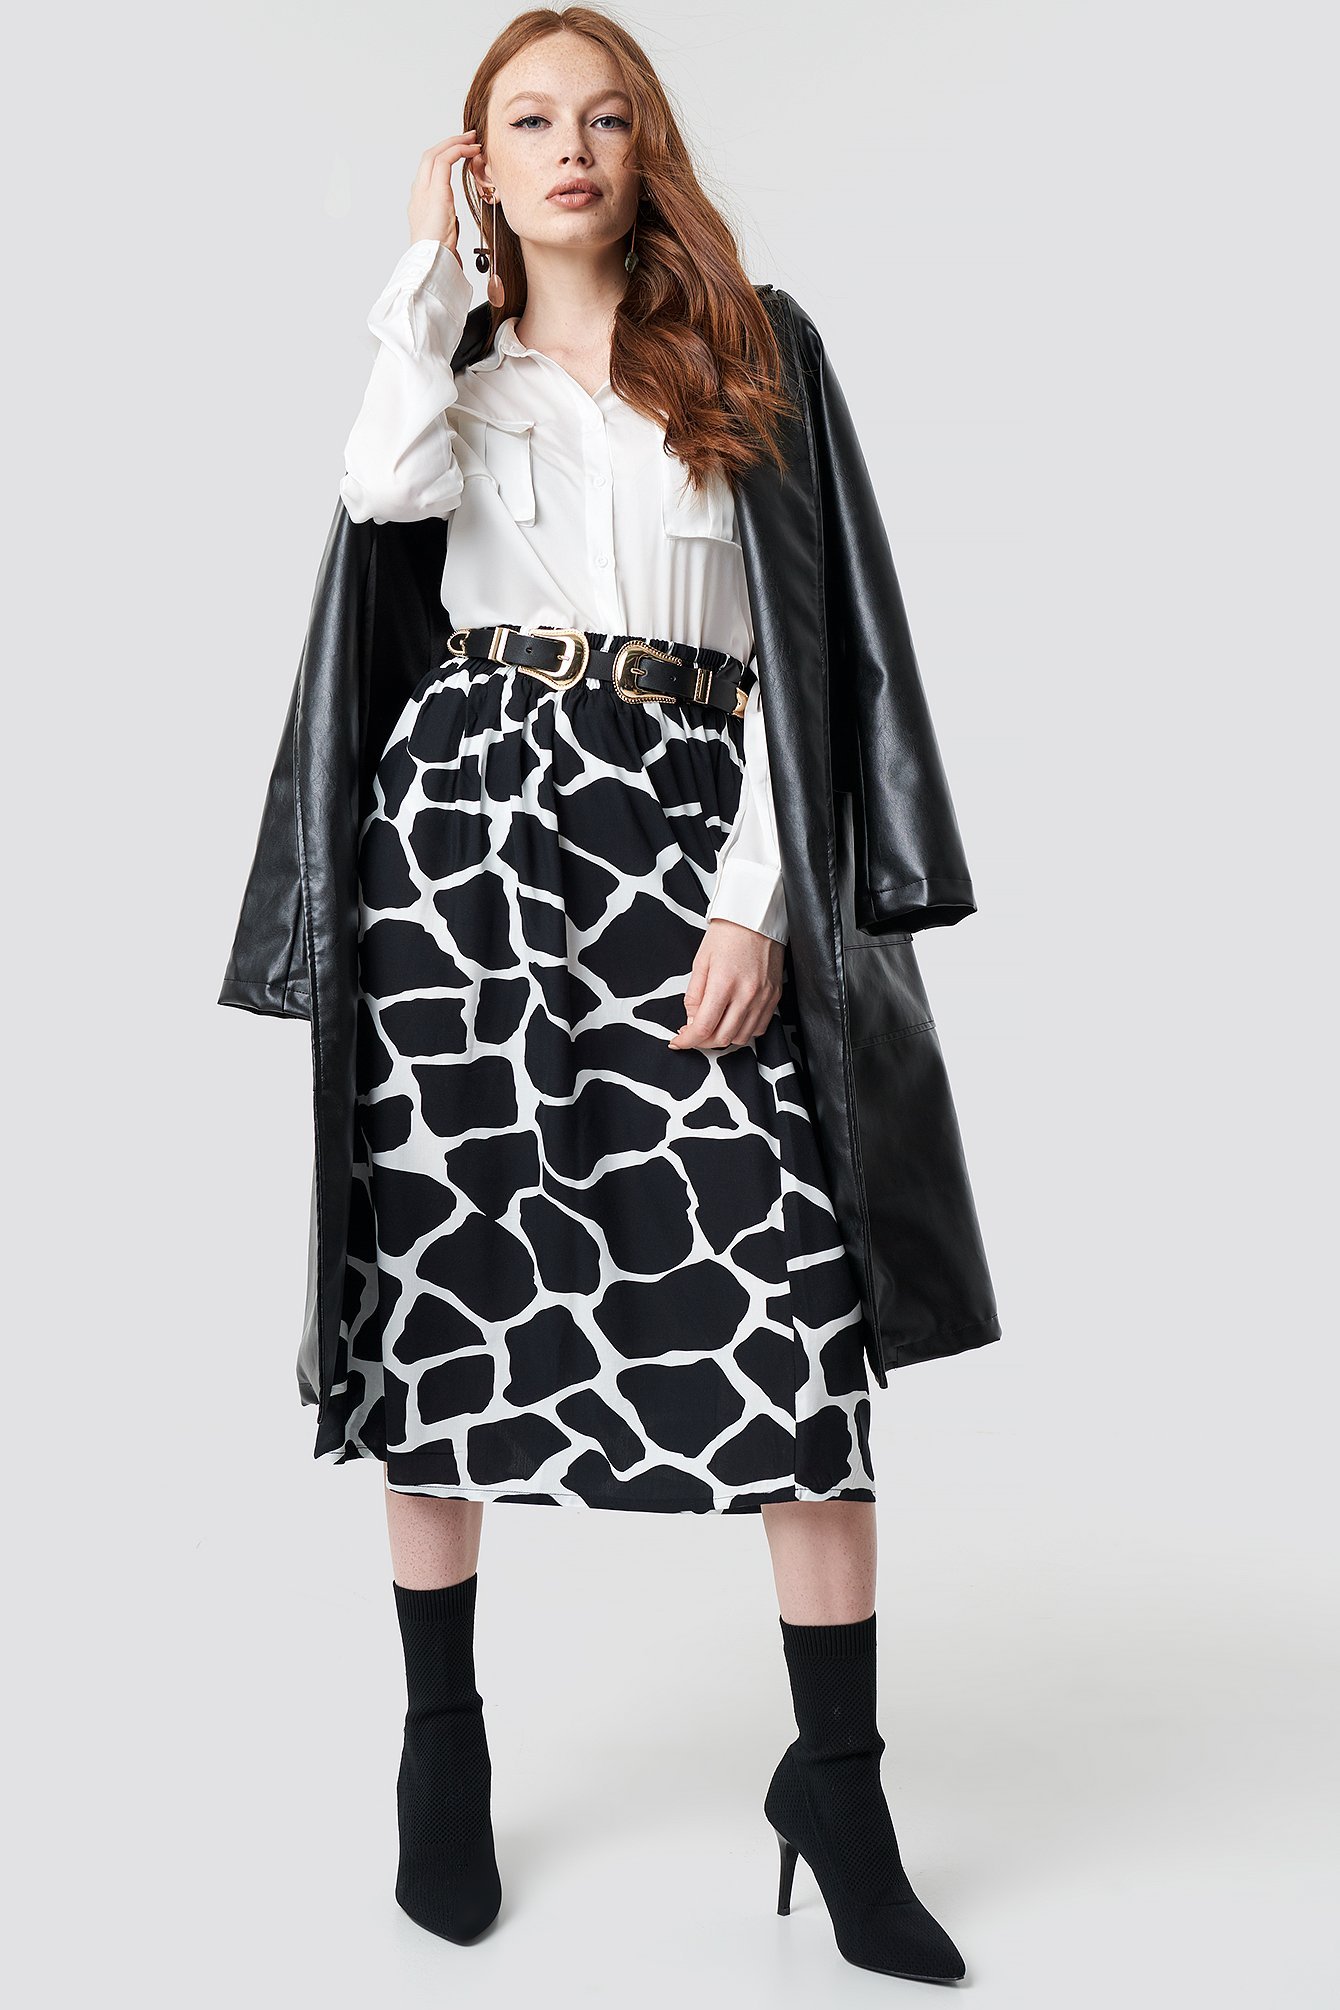 Giraffe Print Midi Skirt Outfit.